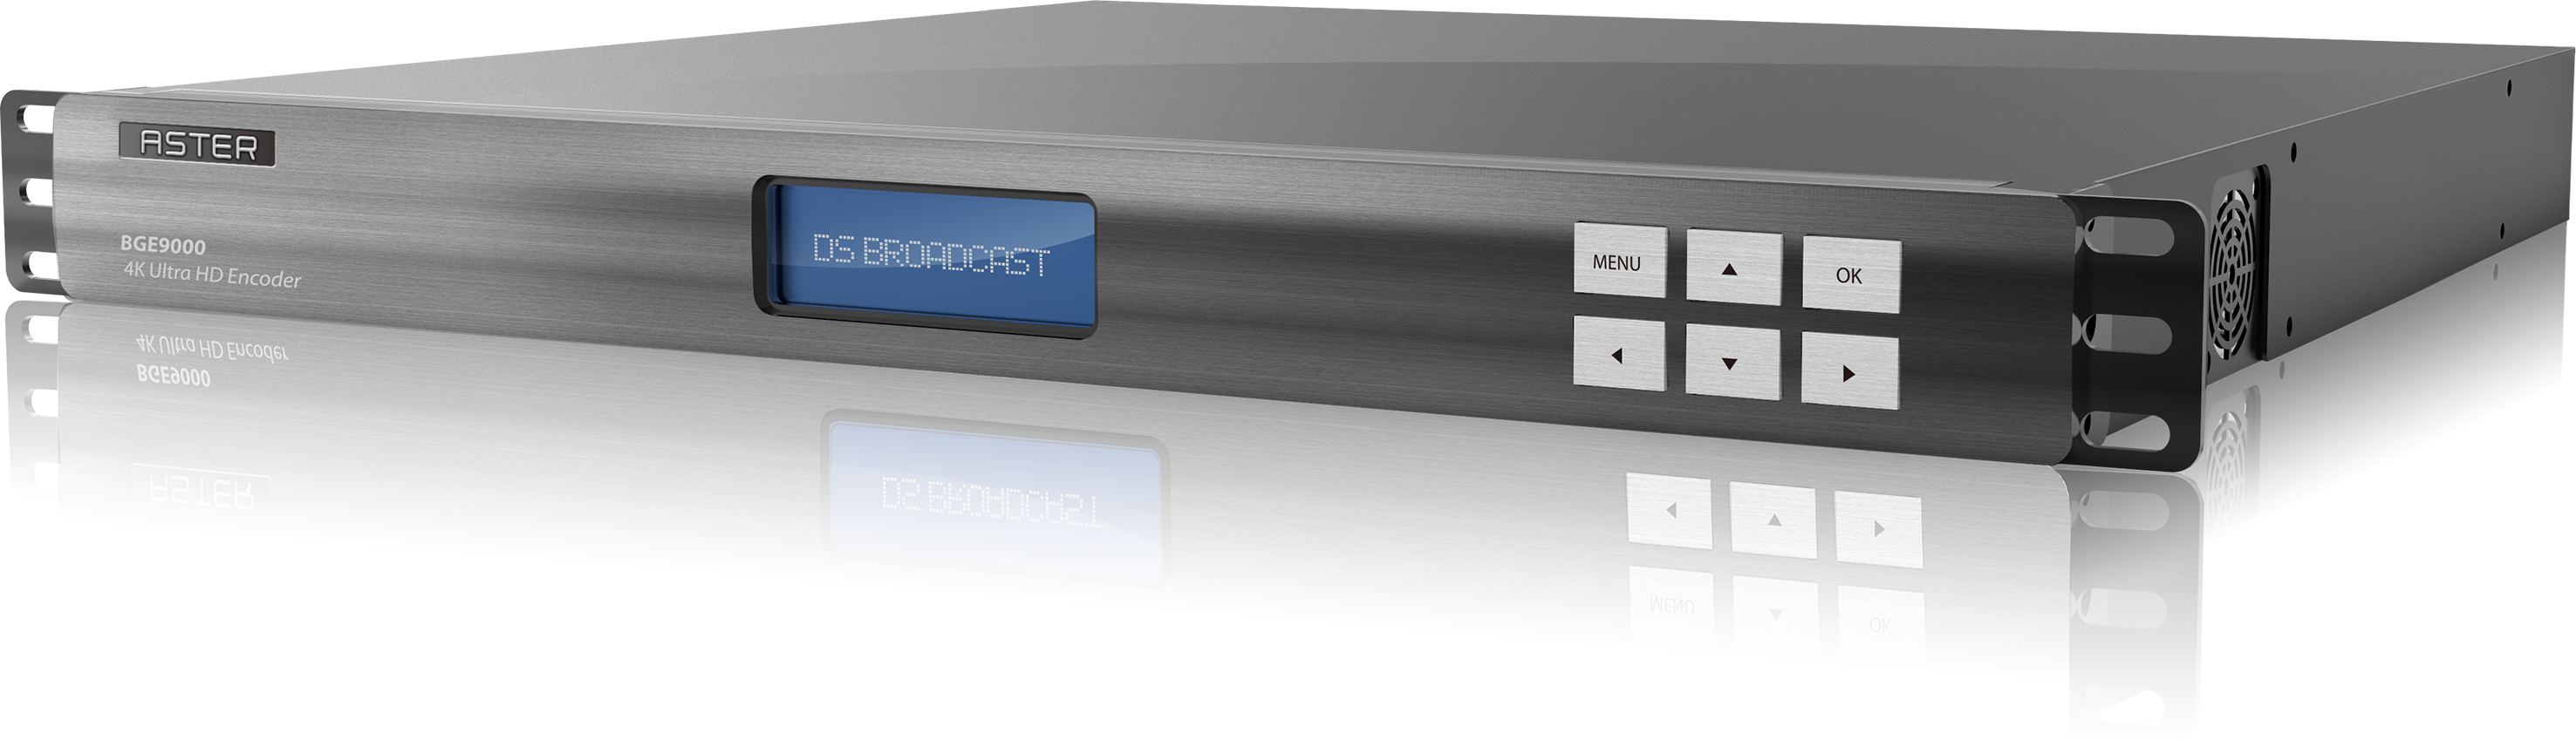 The BGE9000 4K Ultra HD Encoder supports MPEG-H Audio.